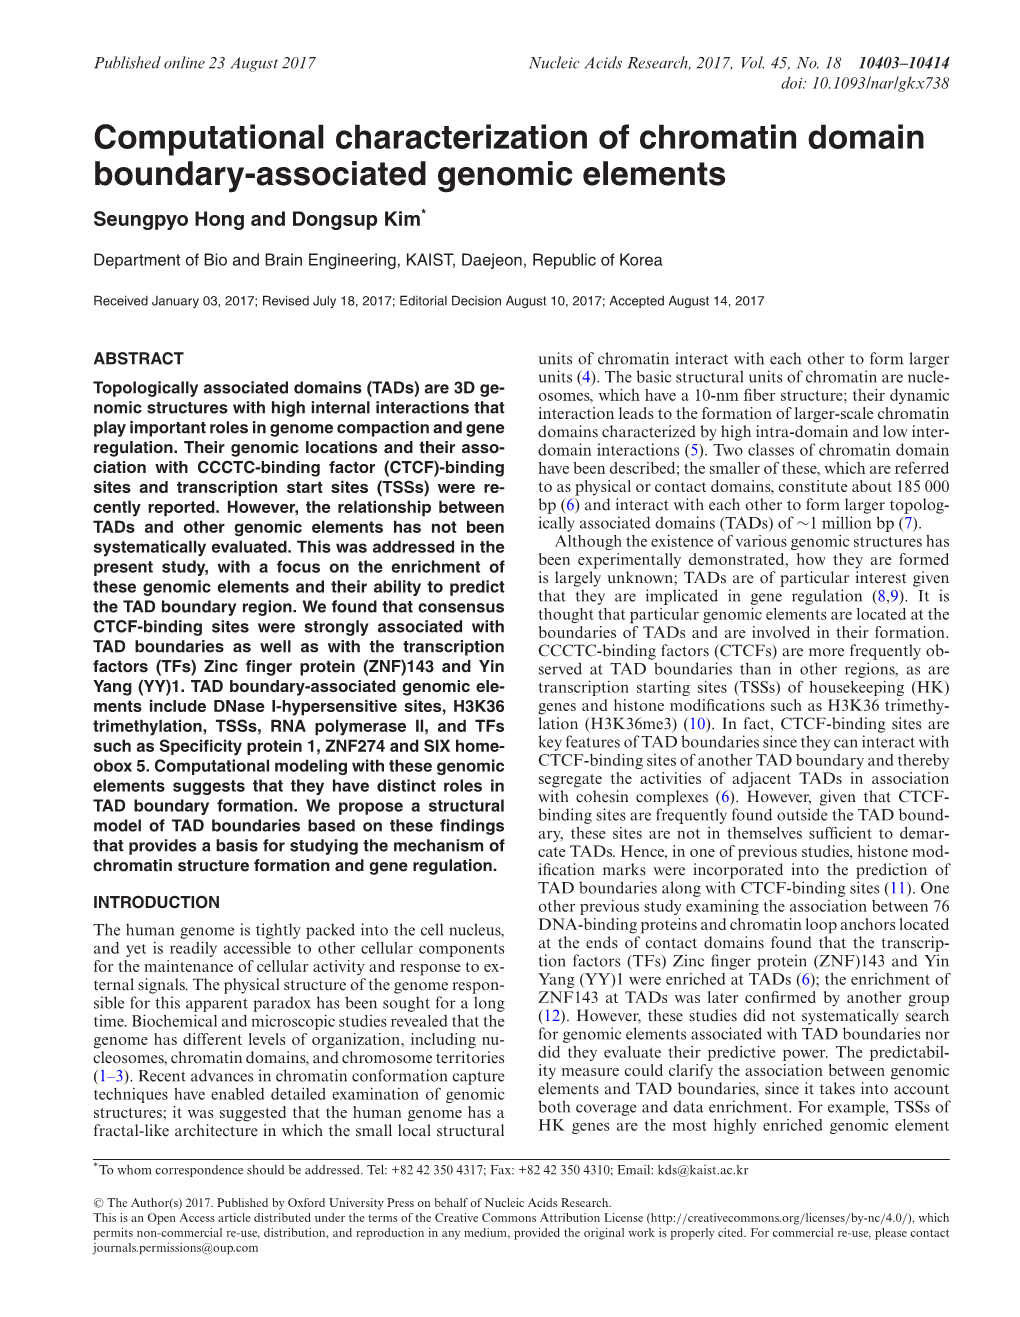 Computational Characterization of Chromatin Domain Boundary-Associated Genomic Elements Seungpyo Hong and Dongsup Kim*